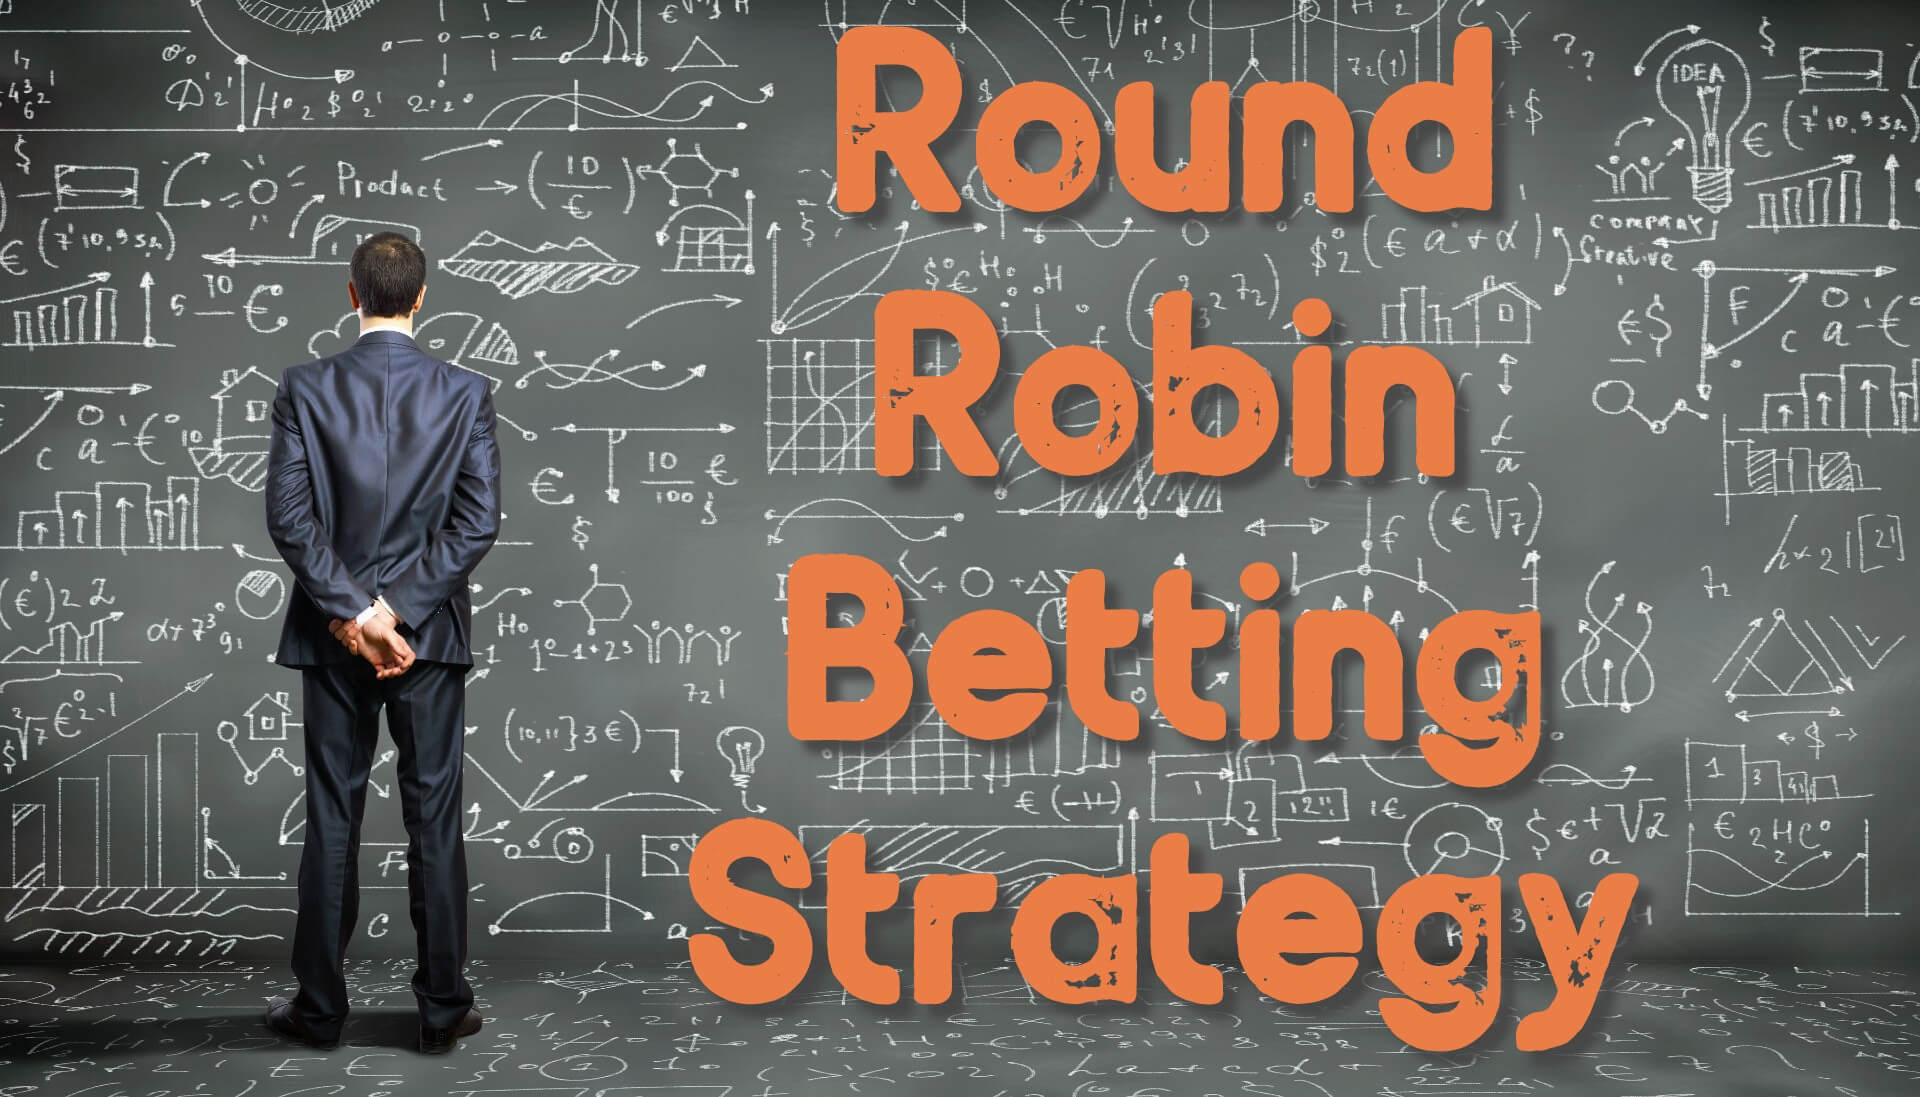 Round Robin Betting strategy